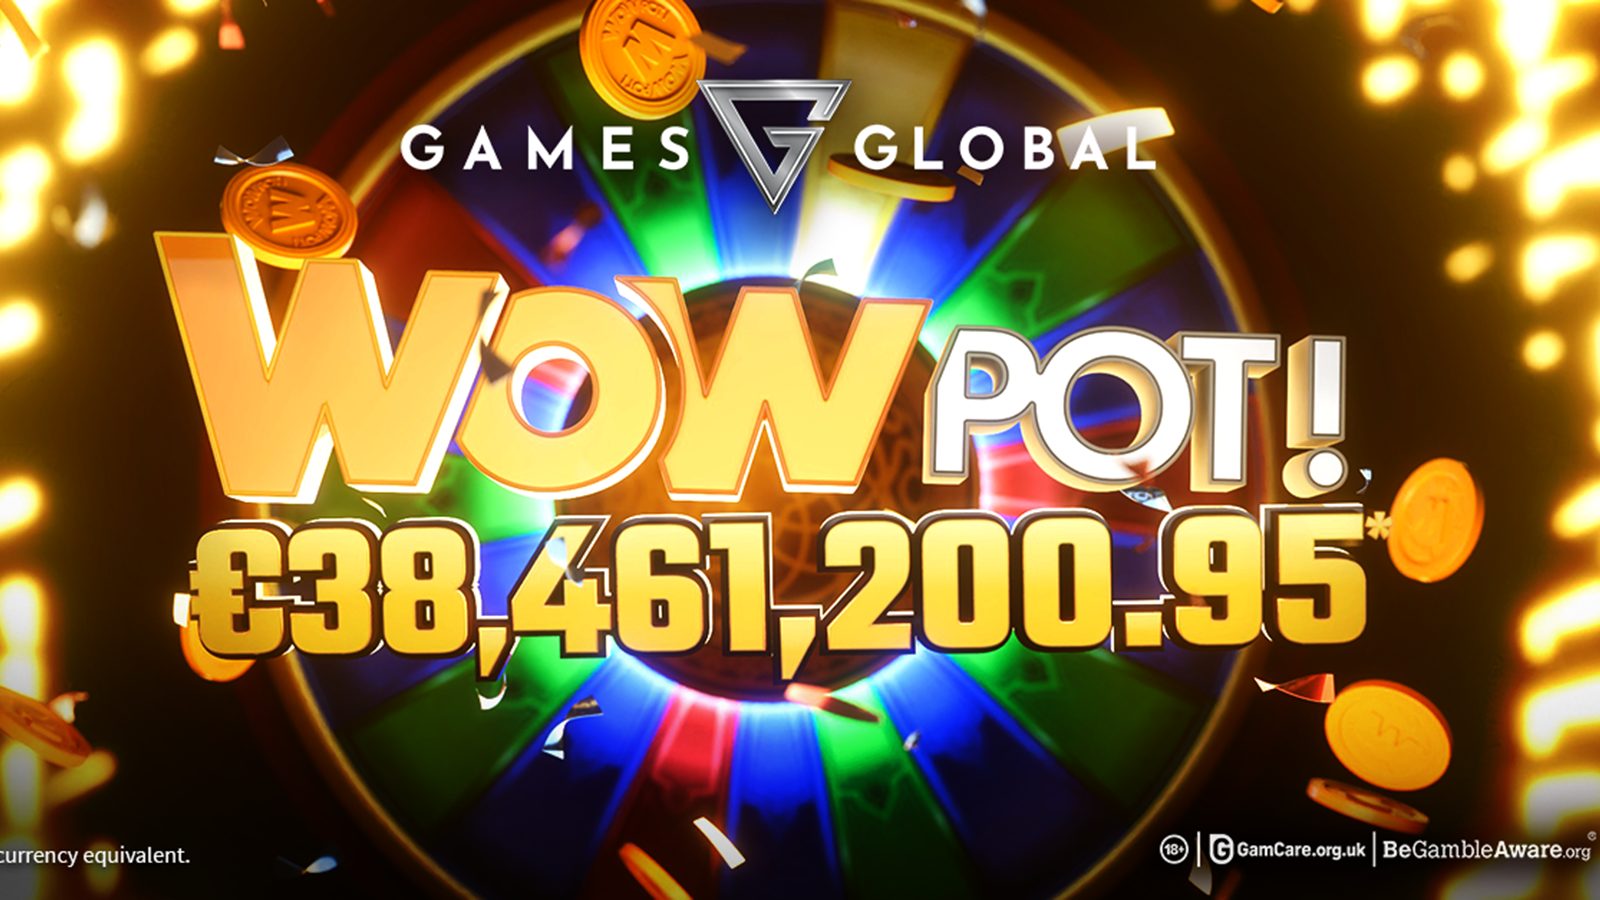 WowPot!™ Games Global's €38.4M Record Win